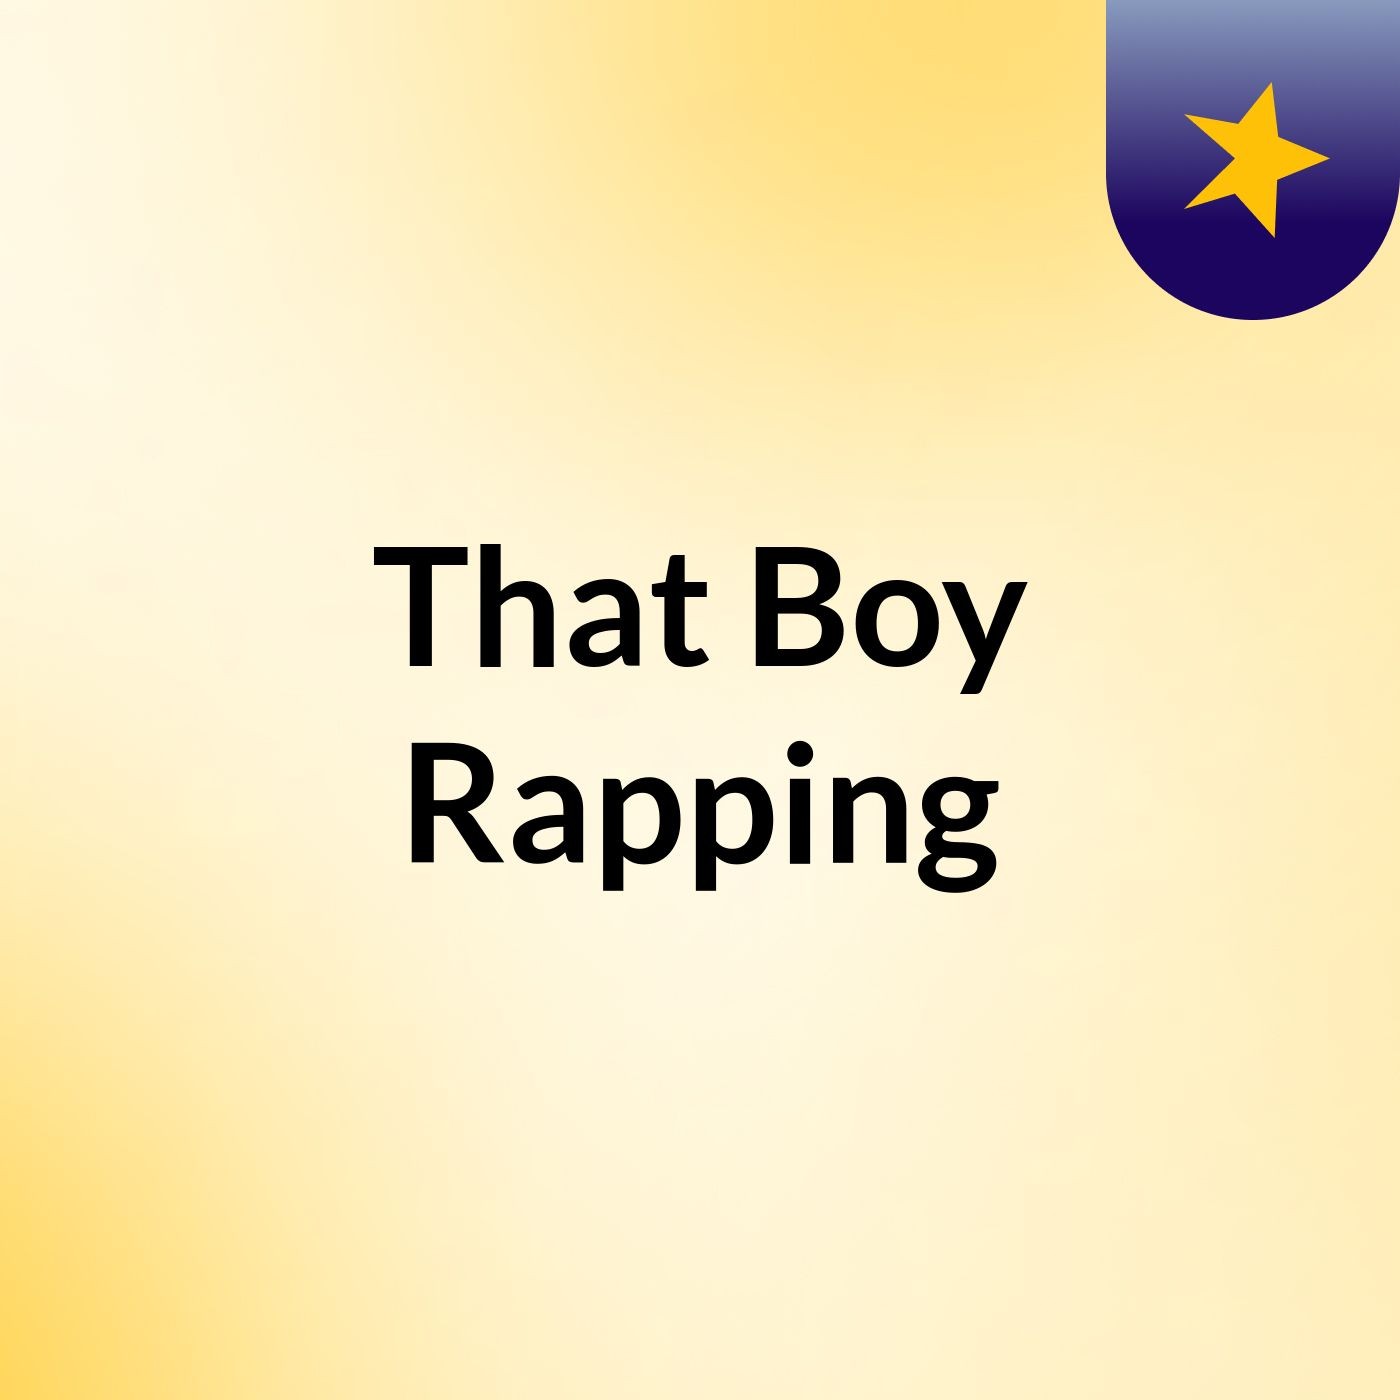 That Boy Rapping